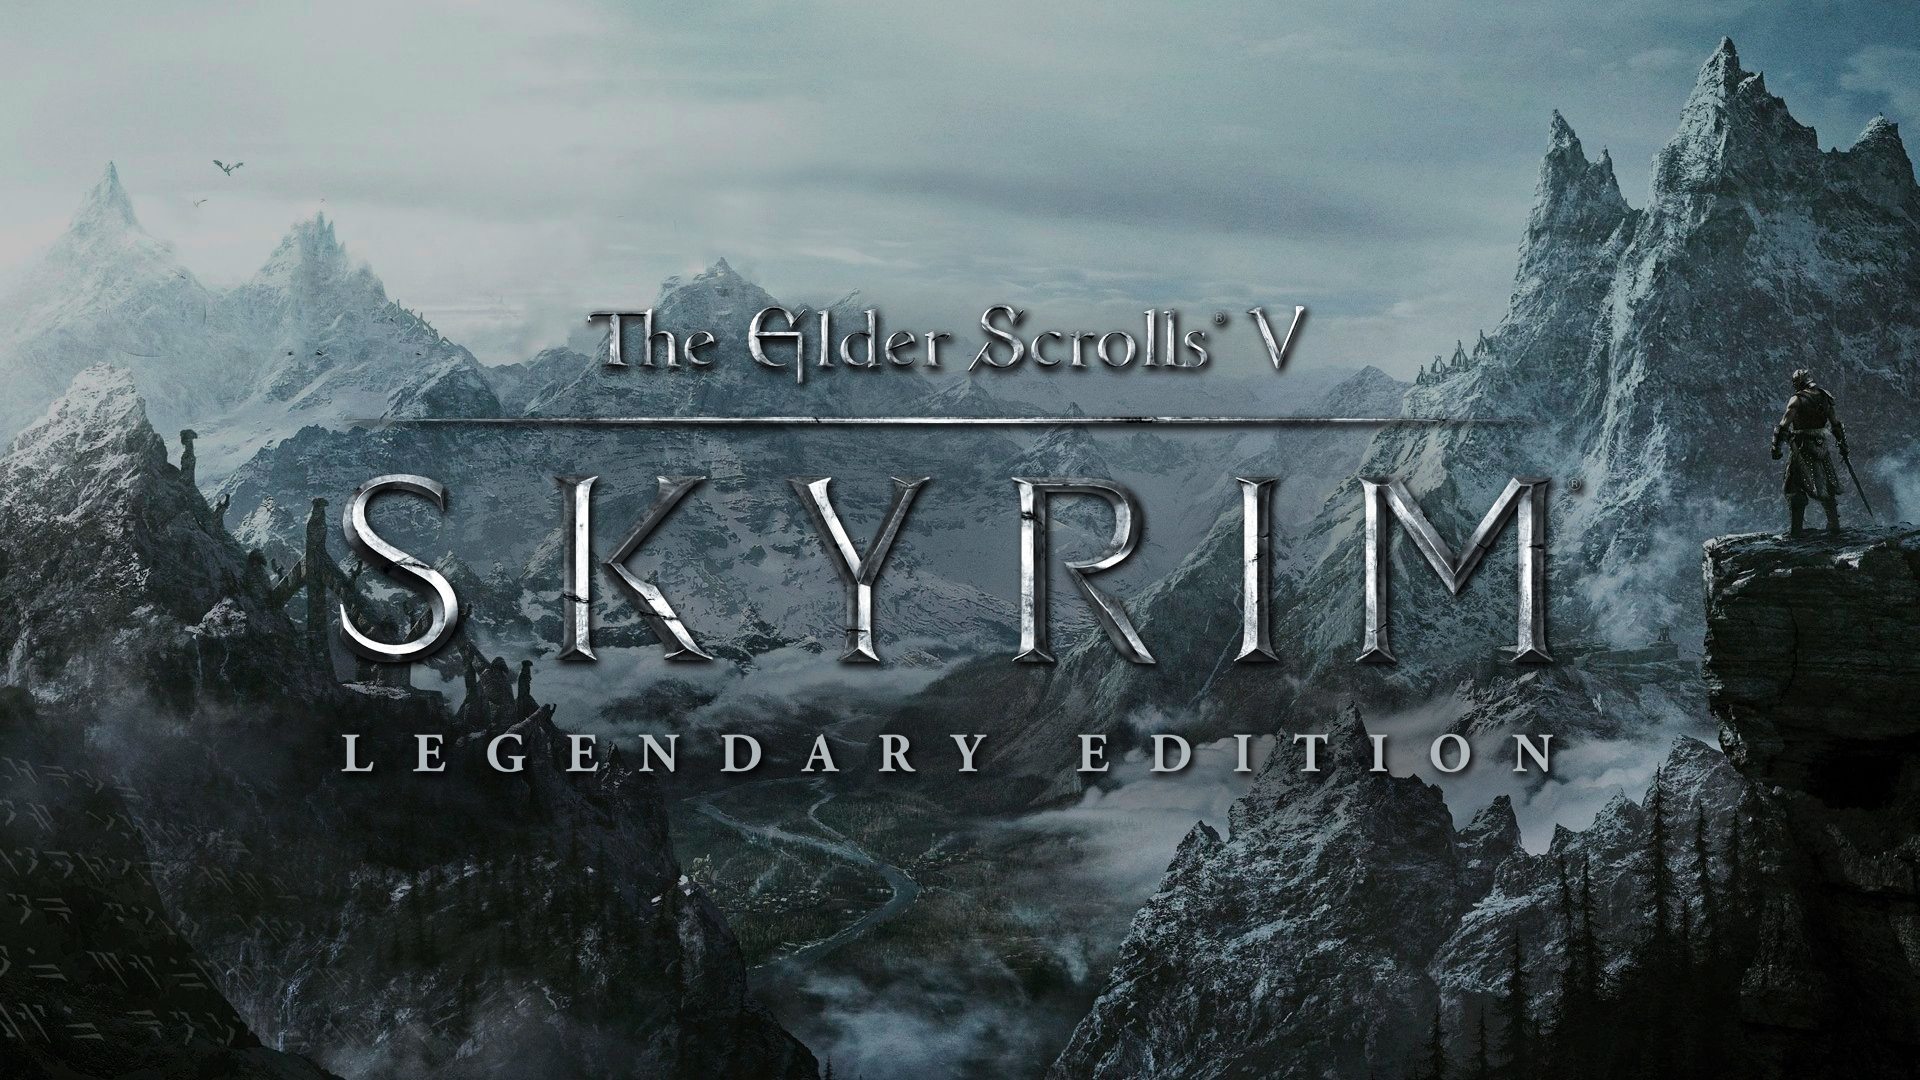 The Elder Scrolls V 5: Skyrim Legendary Edition CD Key + Crack PC Game Free Download